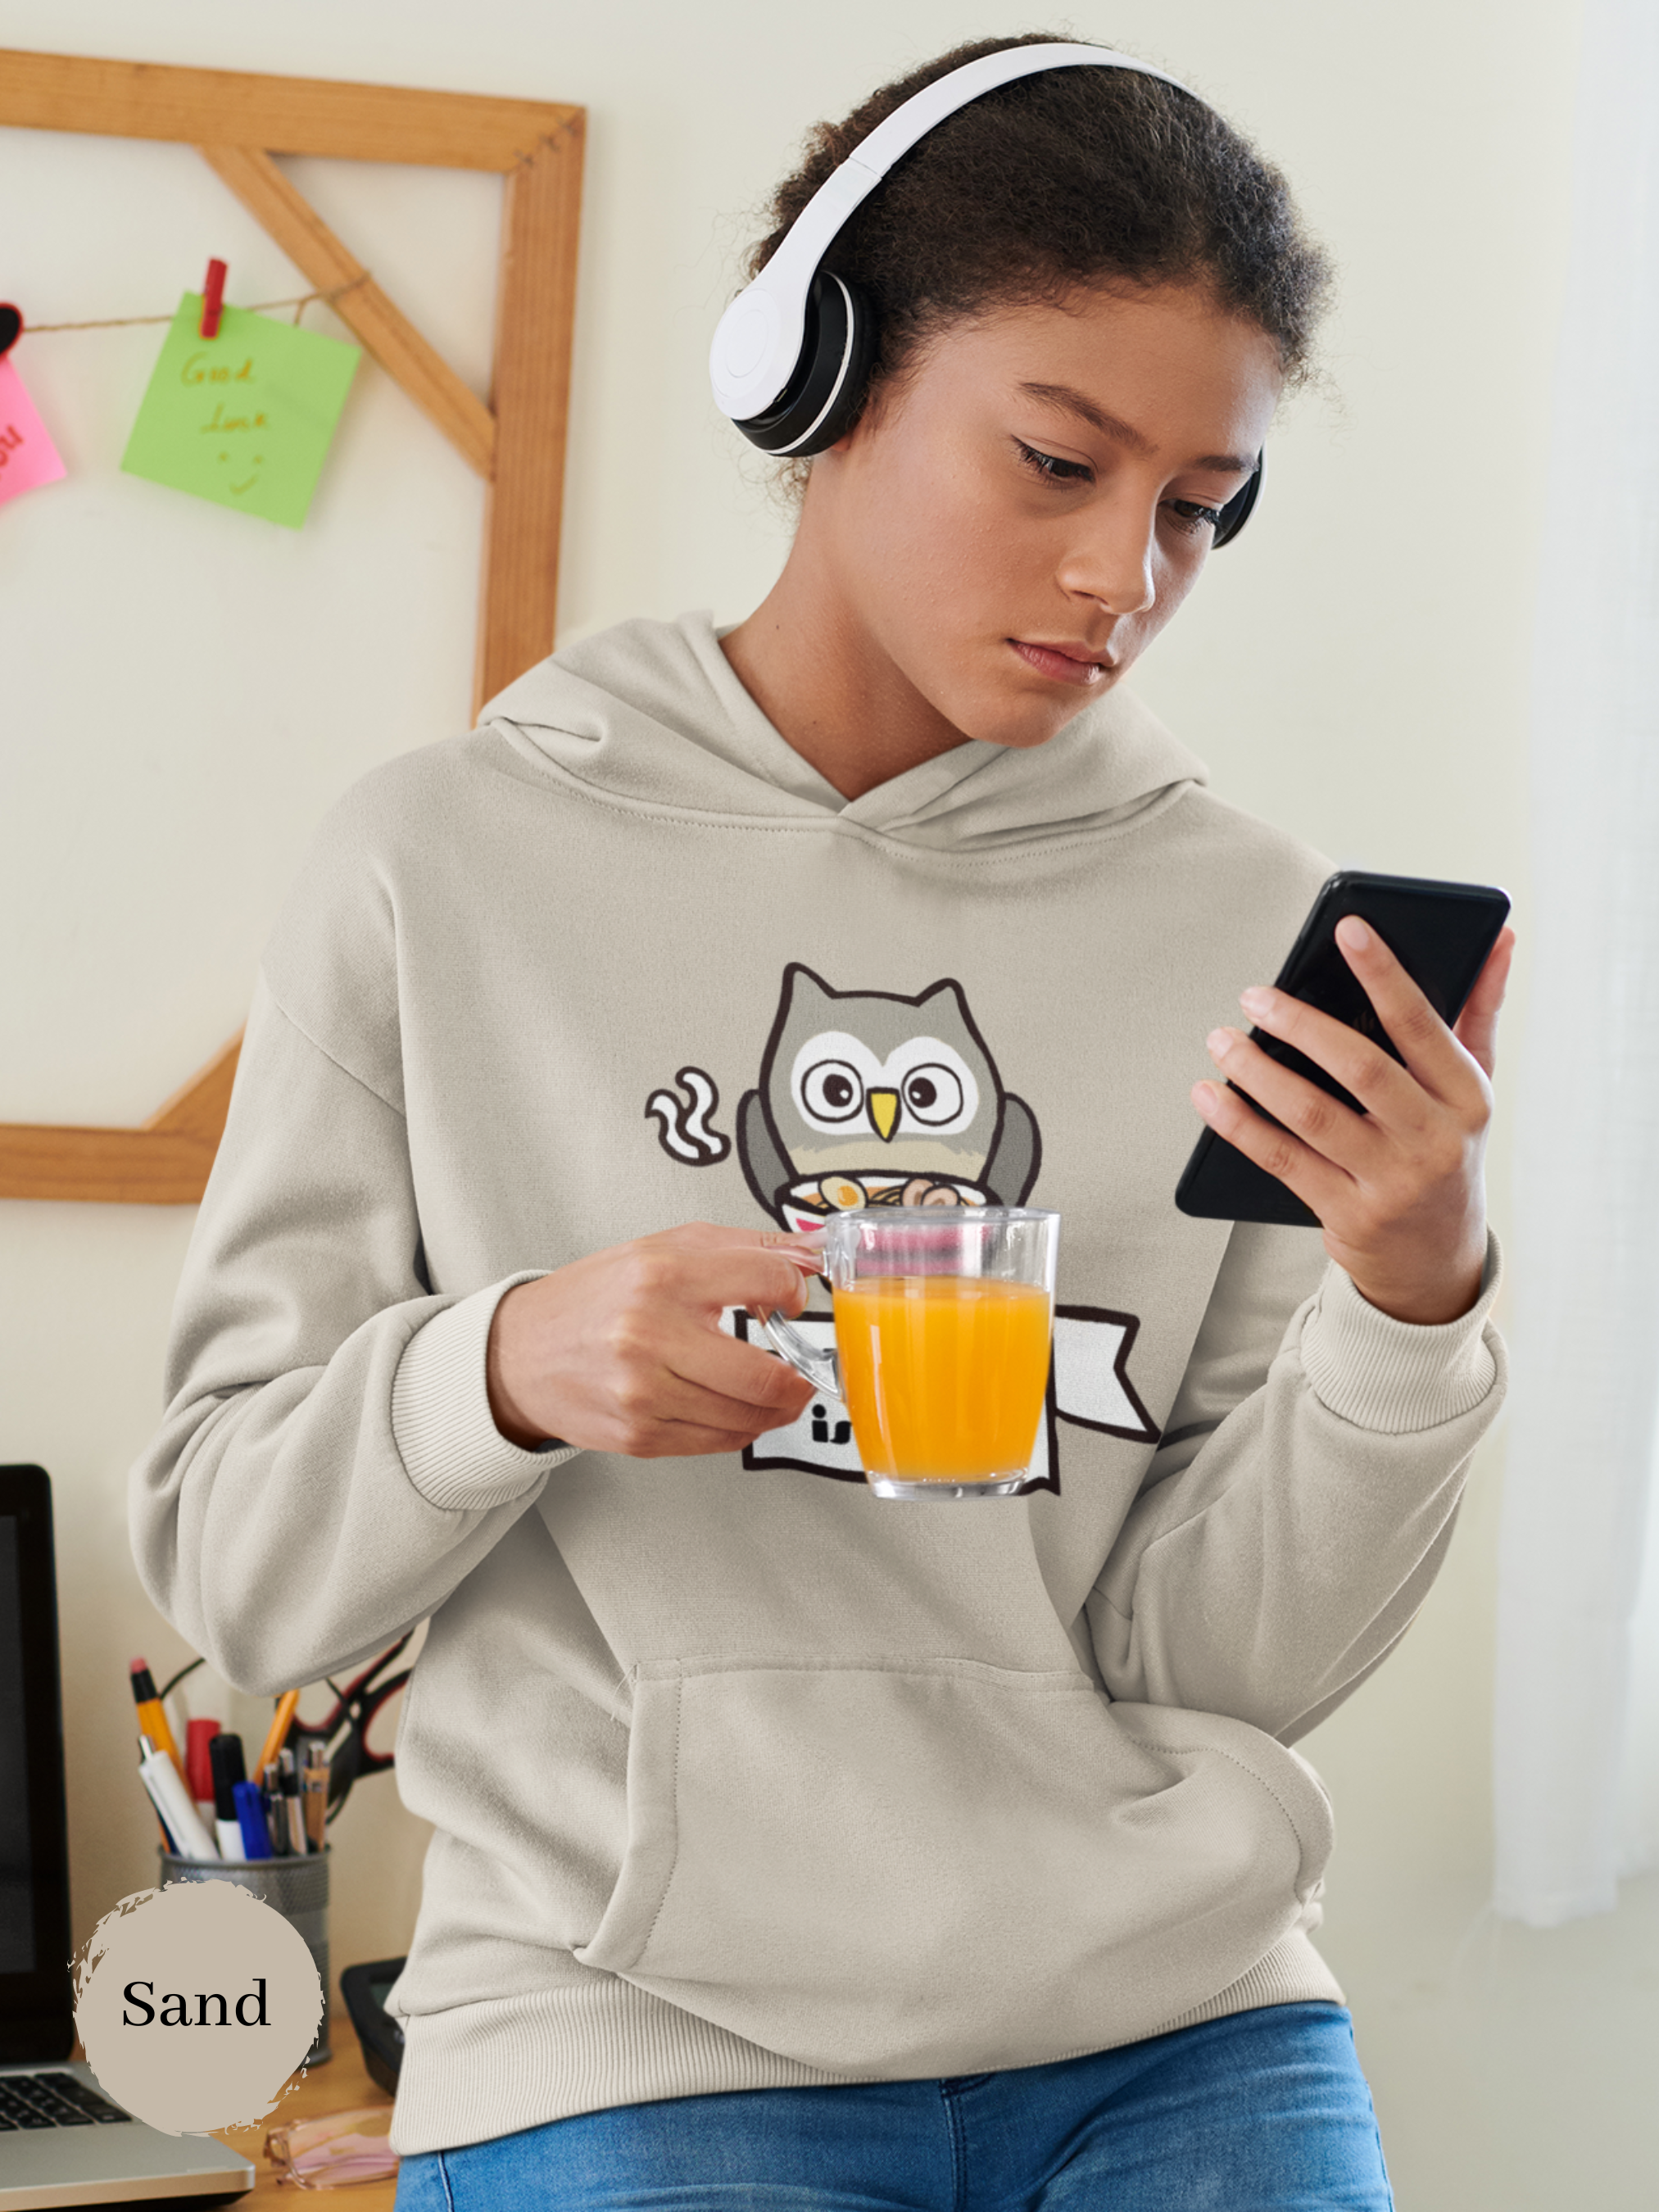 Ramen Hoodie: Owl You Need is Ramen - A Punny Asian Foodie Hoodie with Charming Ramen Art